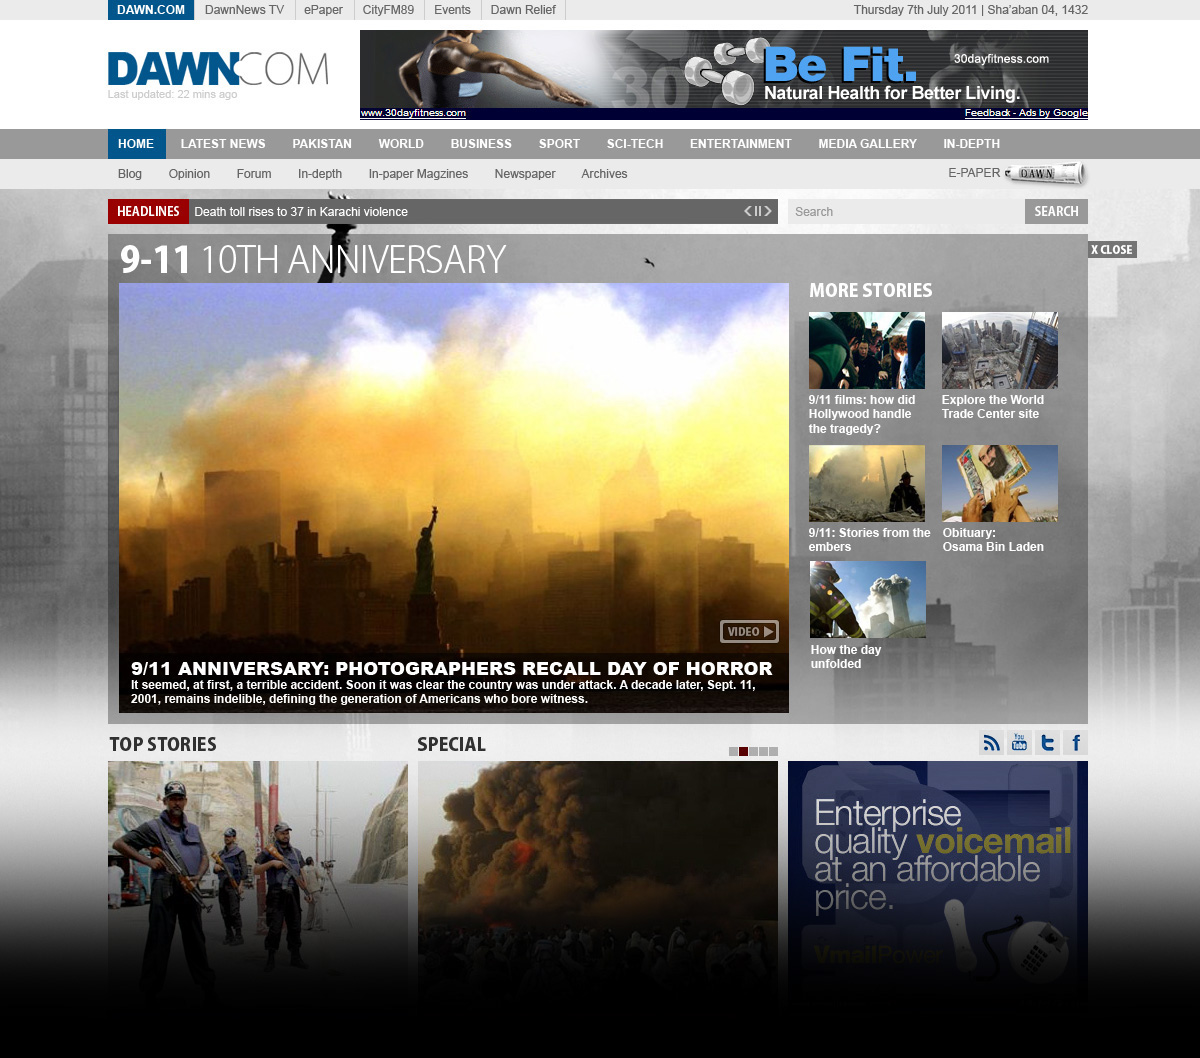 dawn.com DAWN newspaper news Website Pakistan karachi islamabad lahore media omair .com dotcom news group